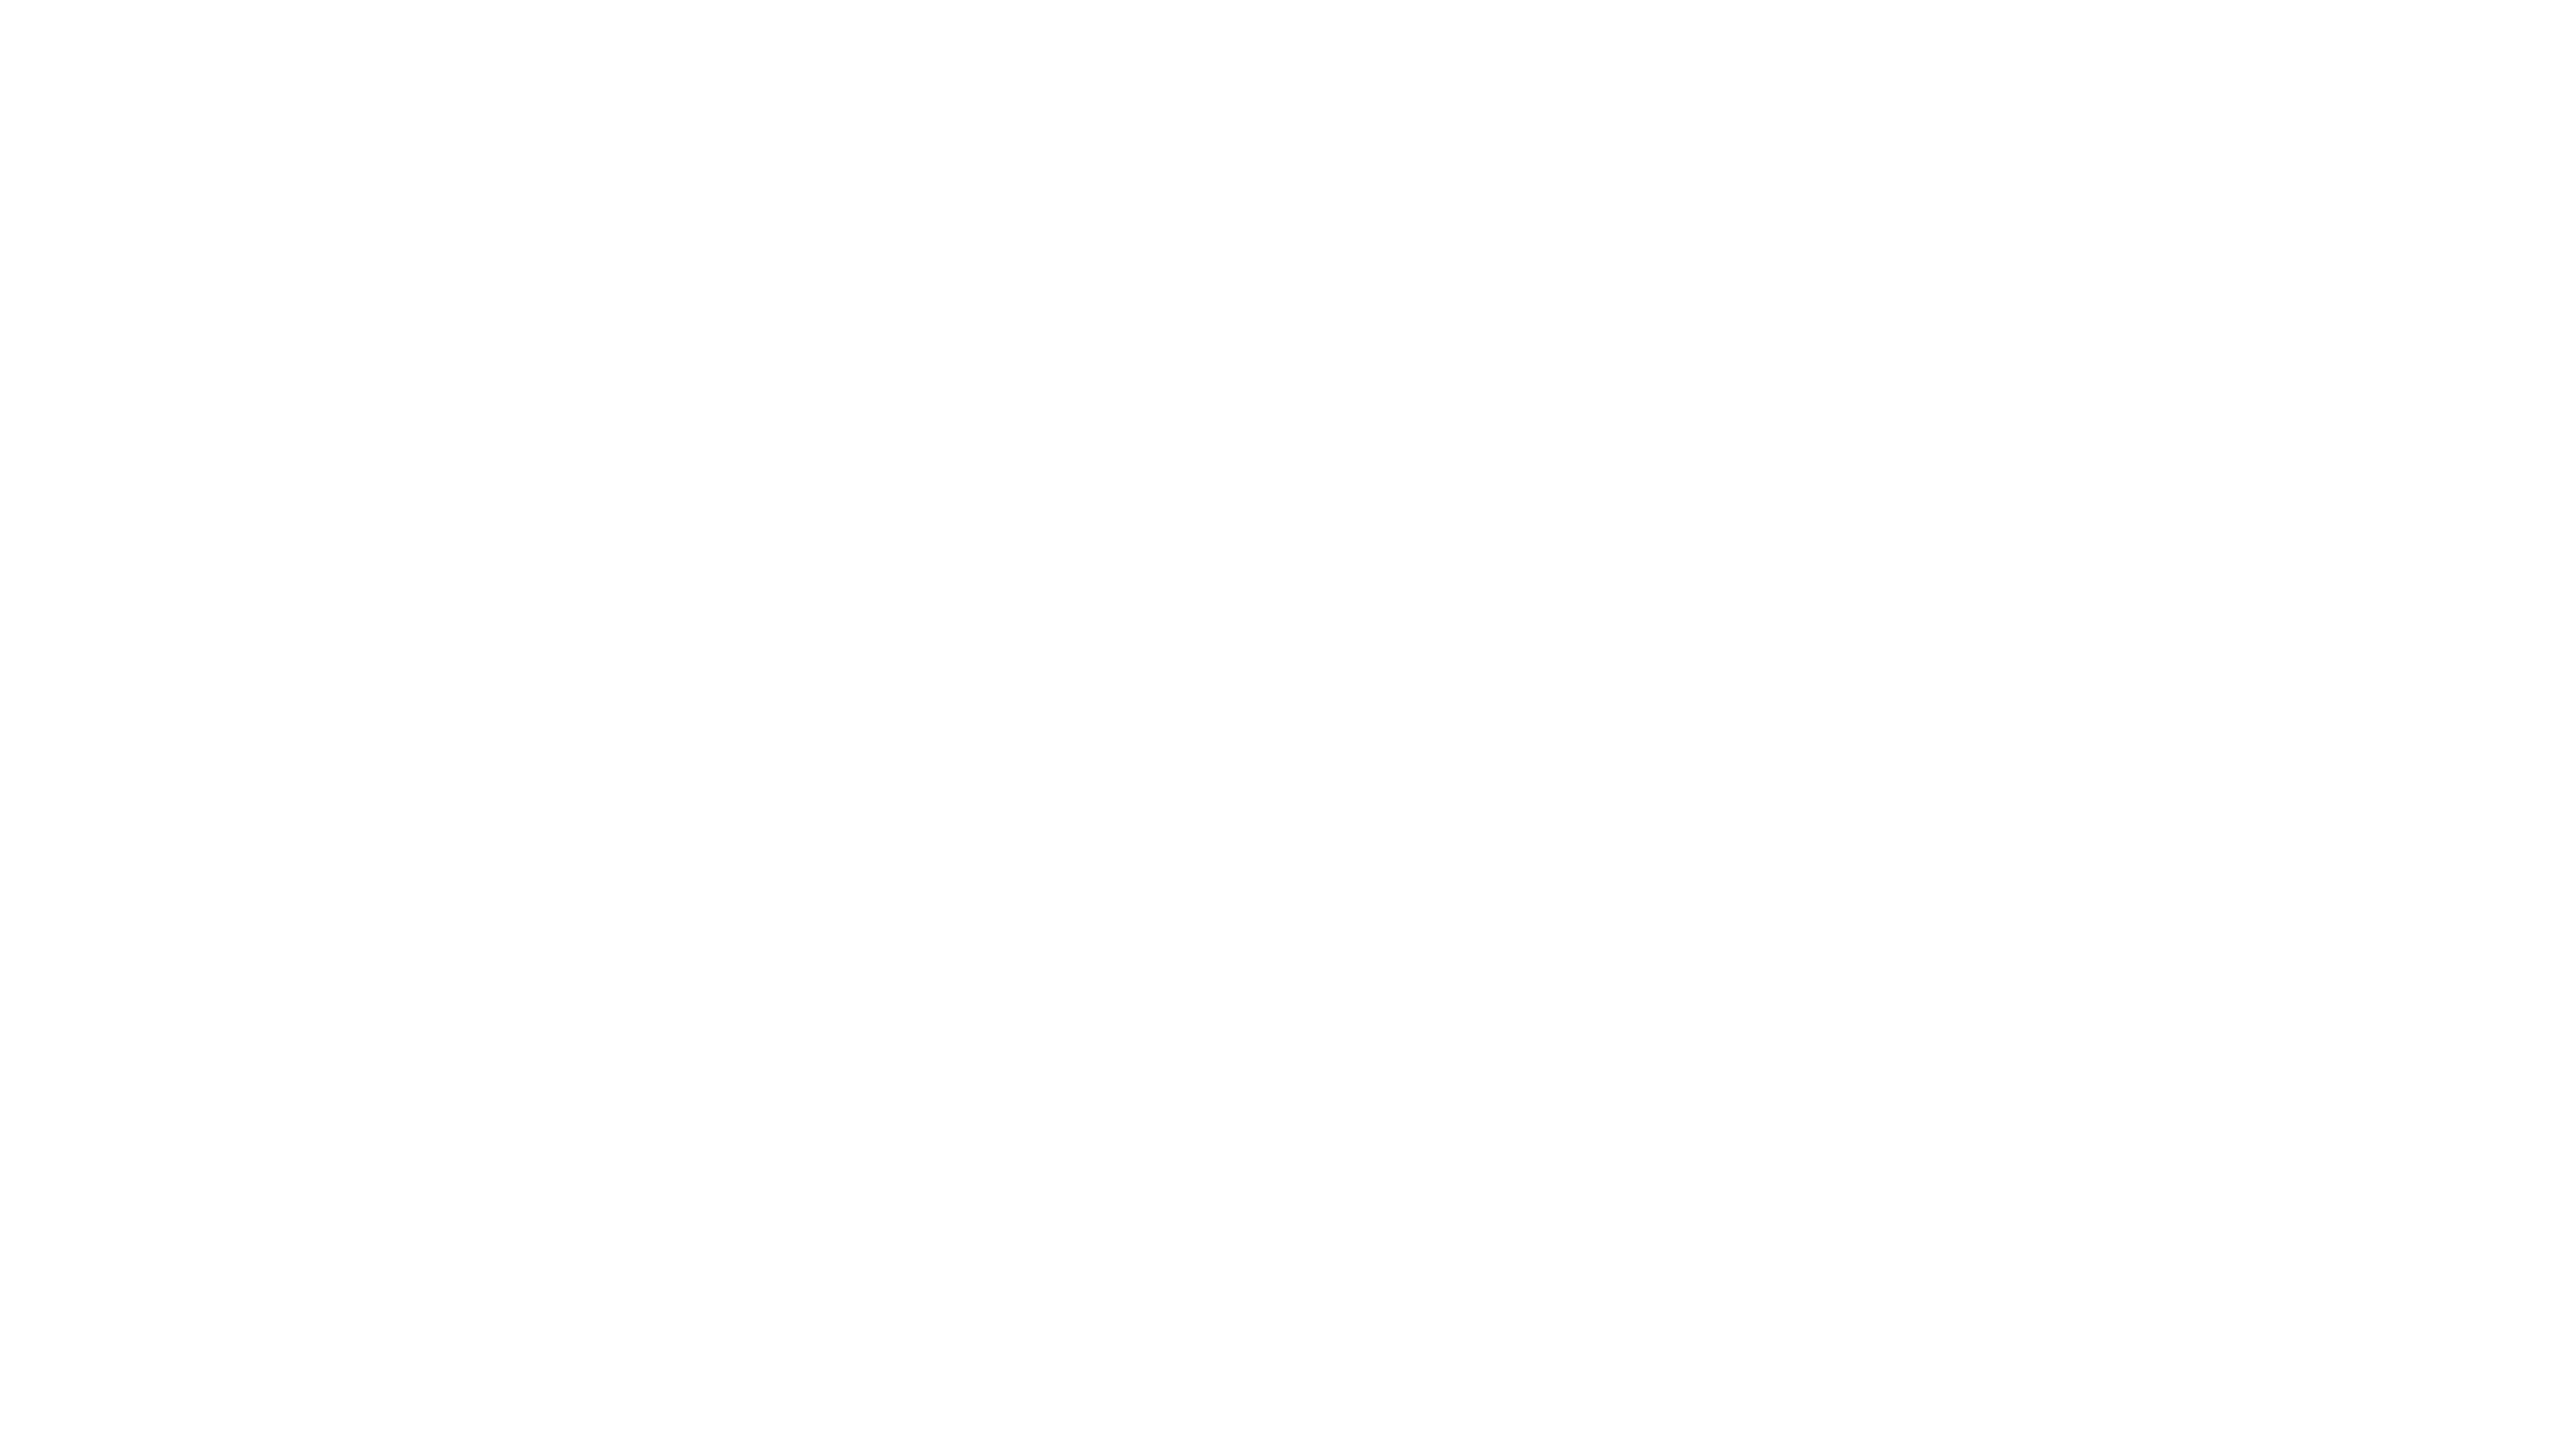 Surf on Com logo Blanc 3